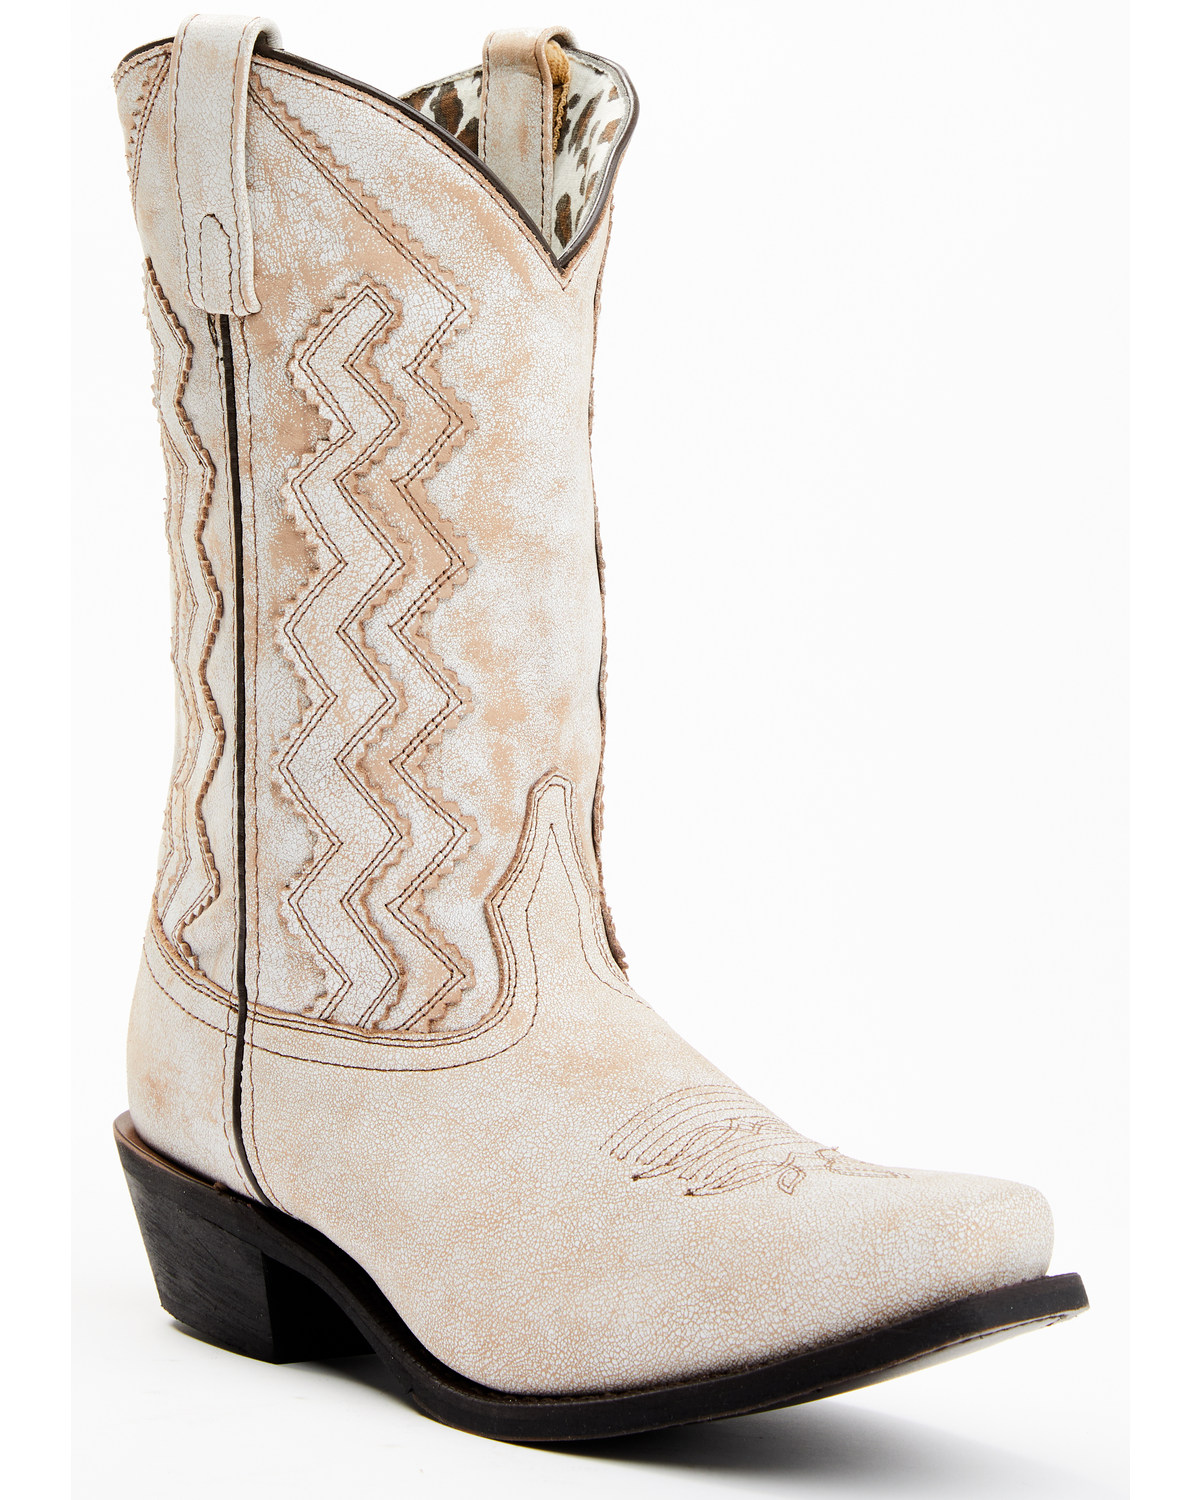 Laredo Women's Rustic Bone Overlay Western Boots - Square Toe